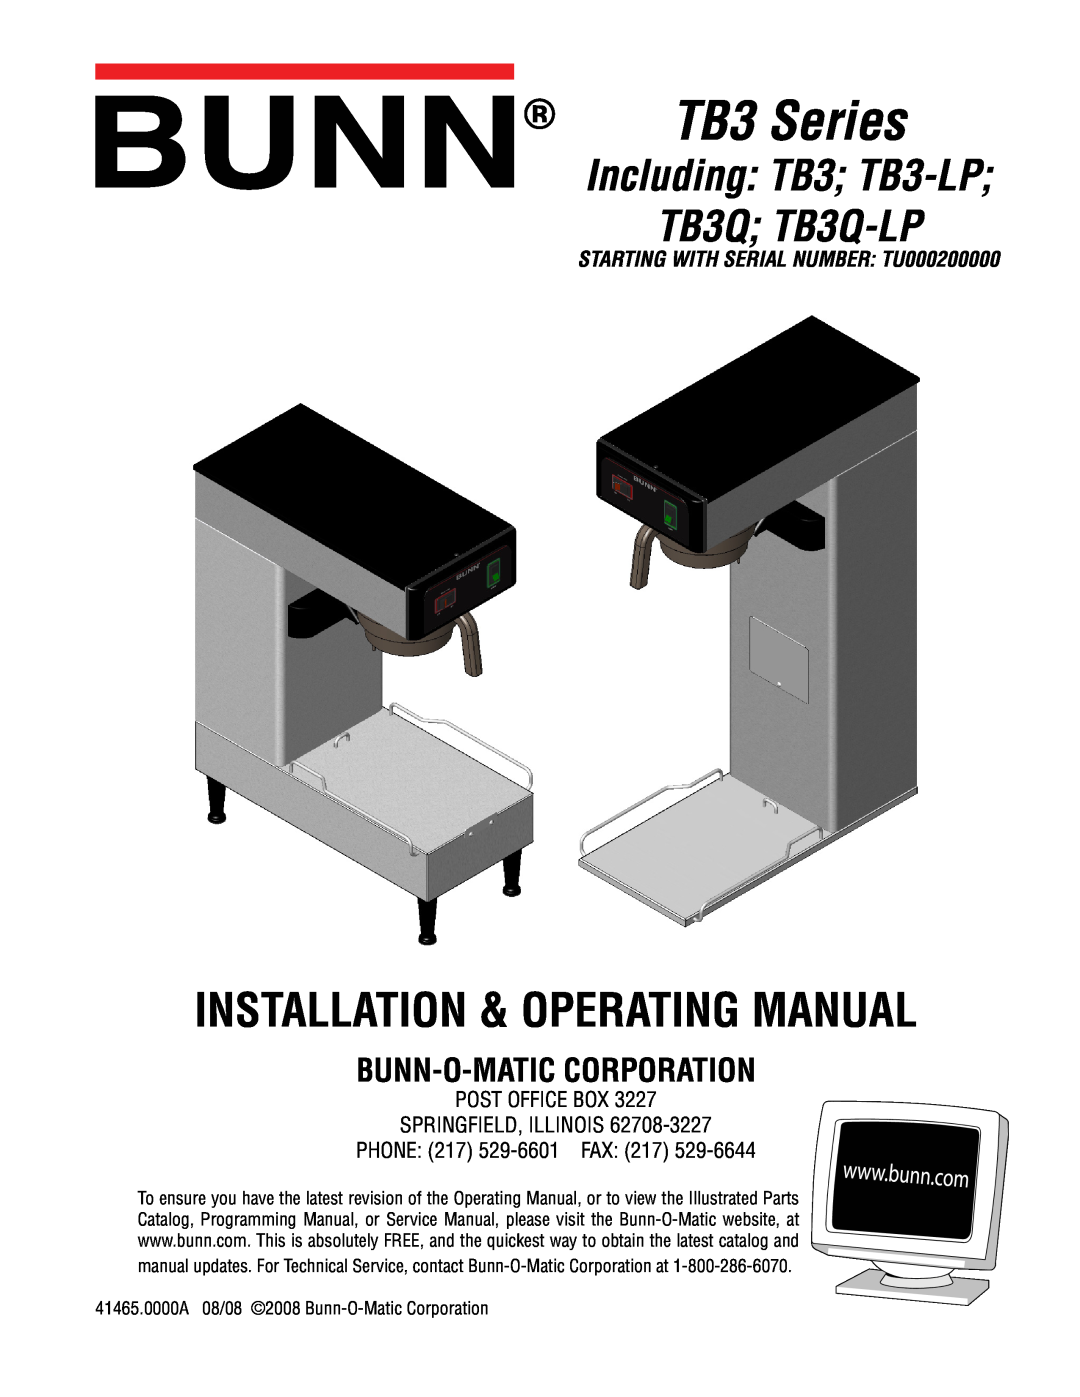 Bunn TB3 Series service manual Installation & Operating Manual, Including TB3 TB3-LP TB3Q TB3Q-LP, Bunn-O-Maticcorporation 